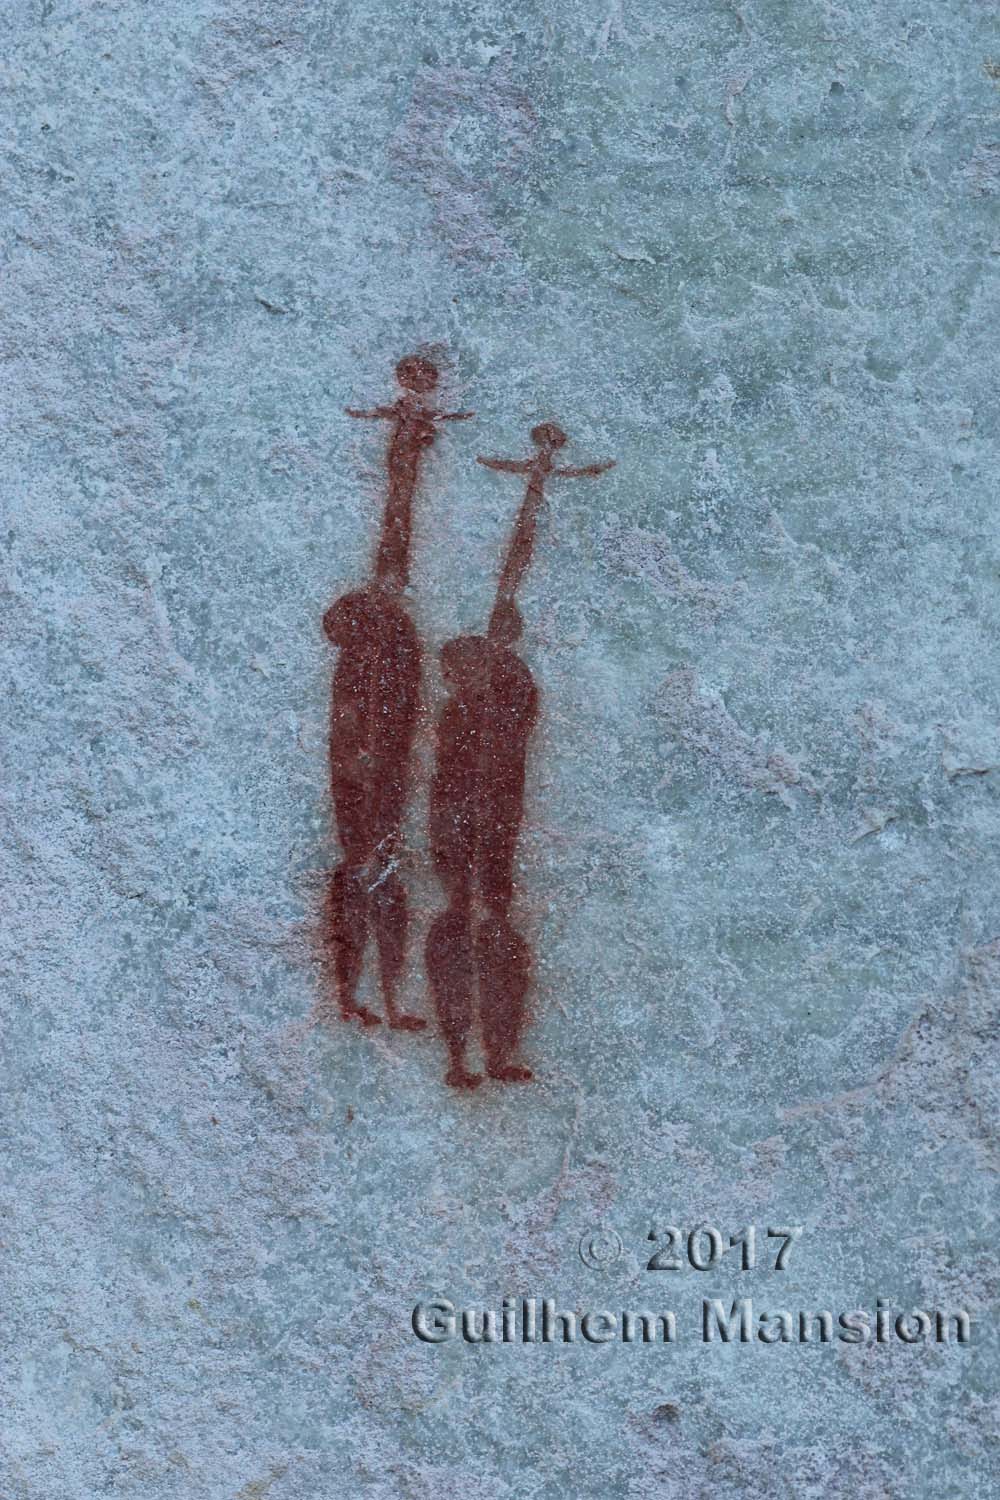 Prehistoric paintings